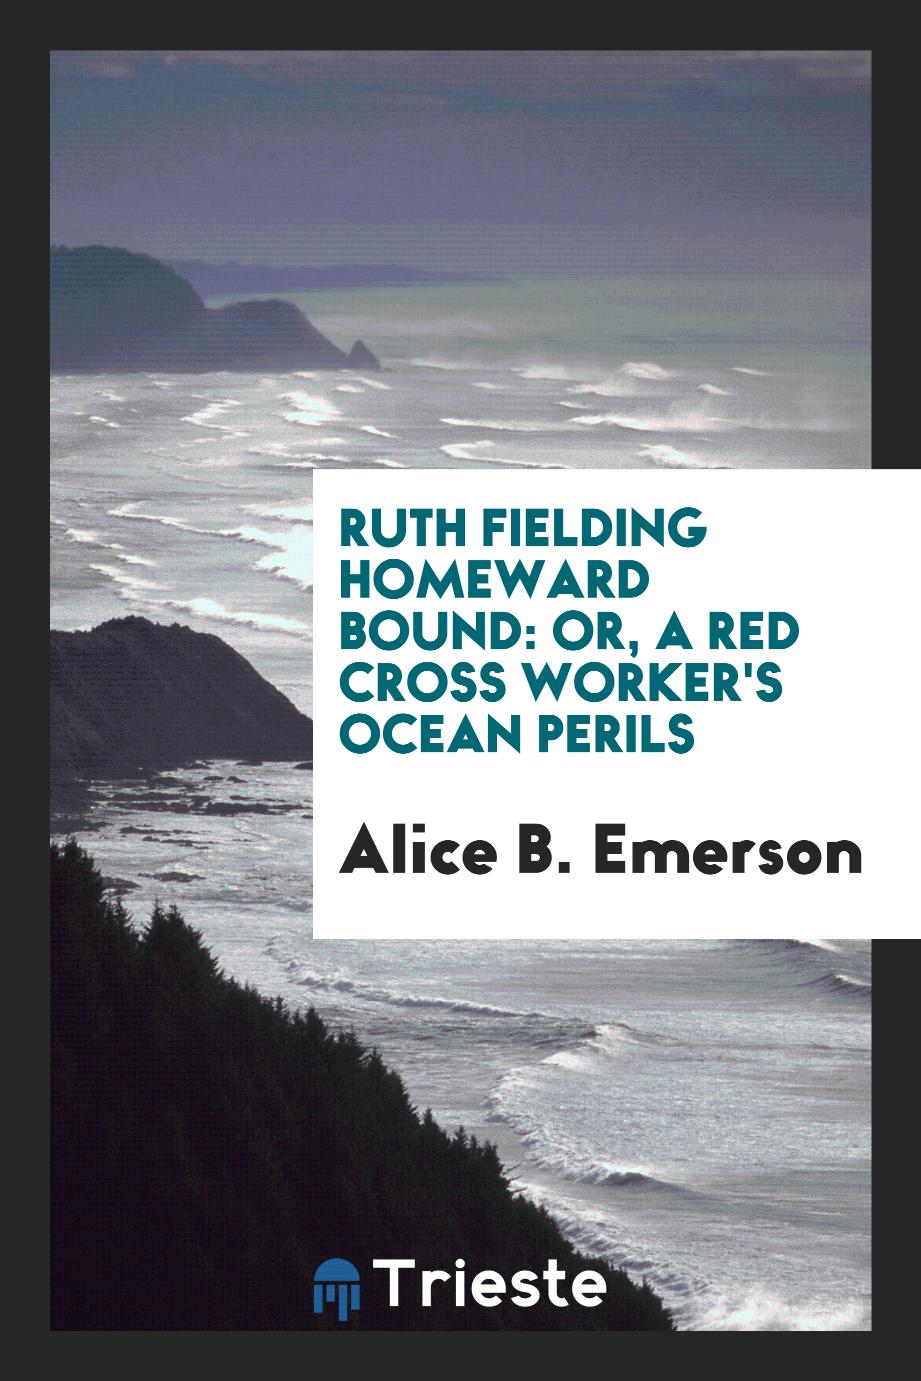 Ruth Fielding homeward bound: or, A Red Cross worker's ocean perils